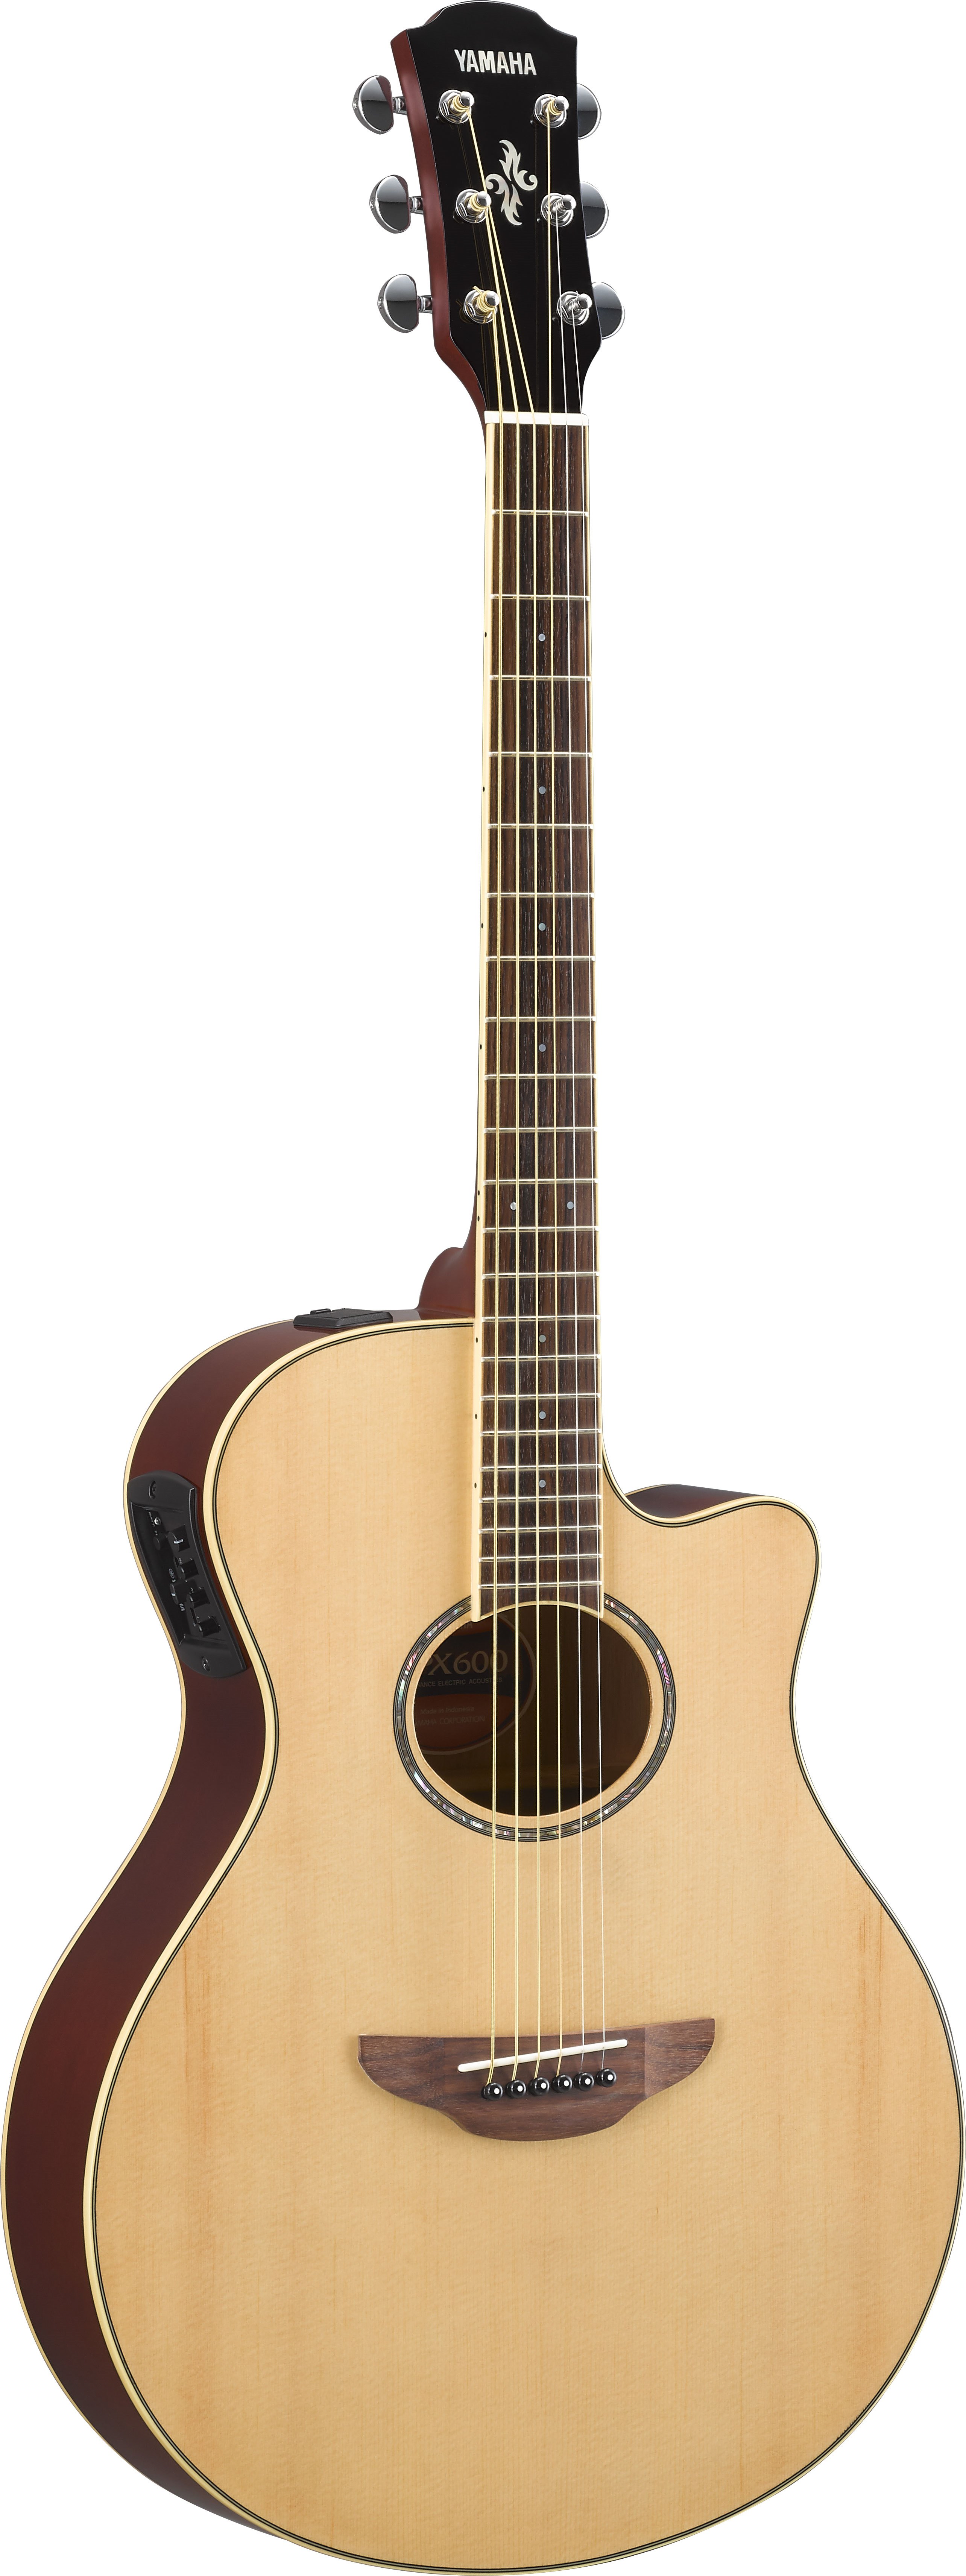 Yamaha Apx600 - Natural - Electro acoustic guitar - Variation 1